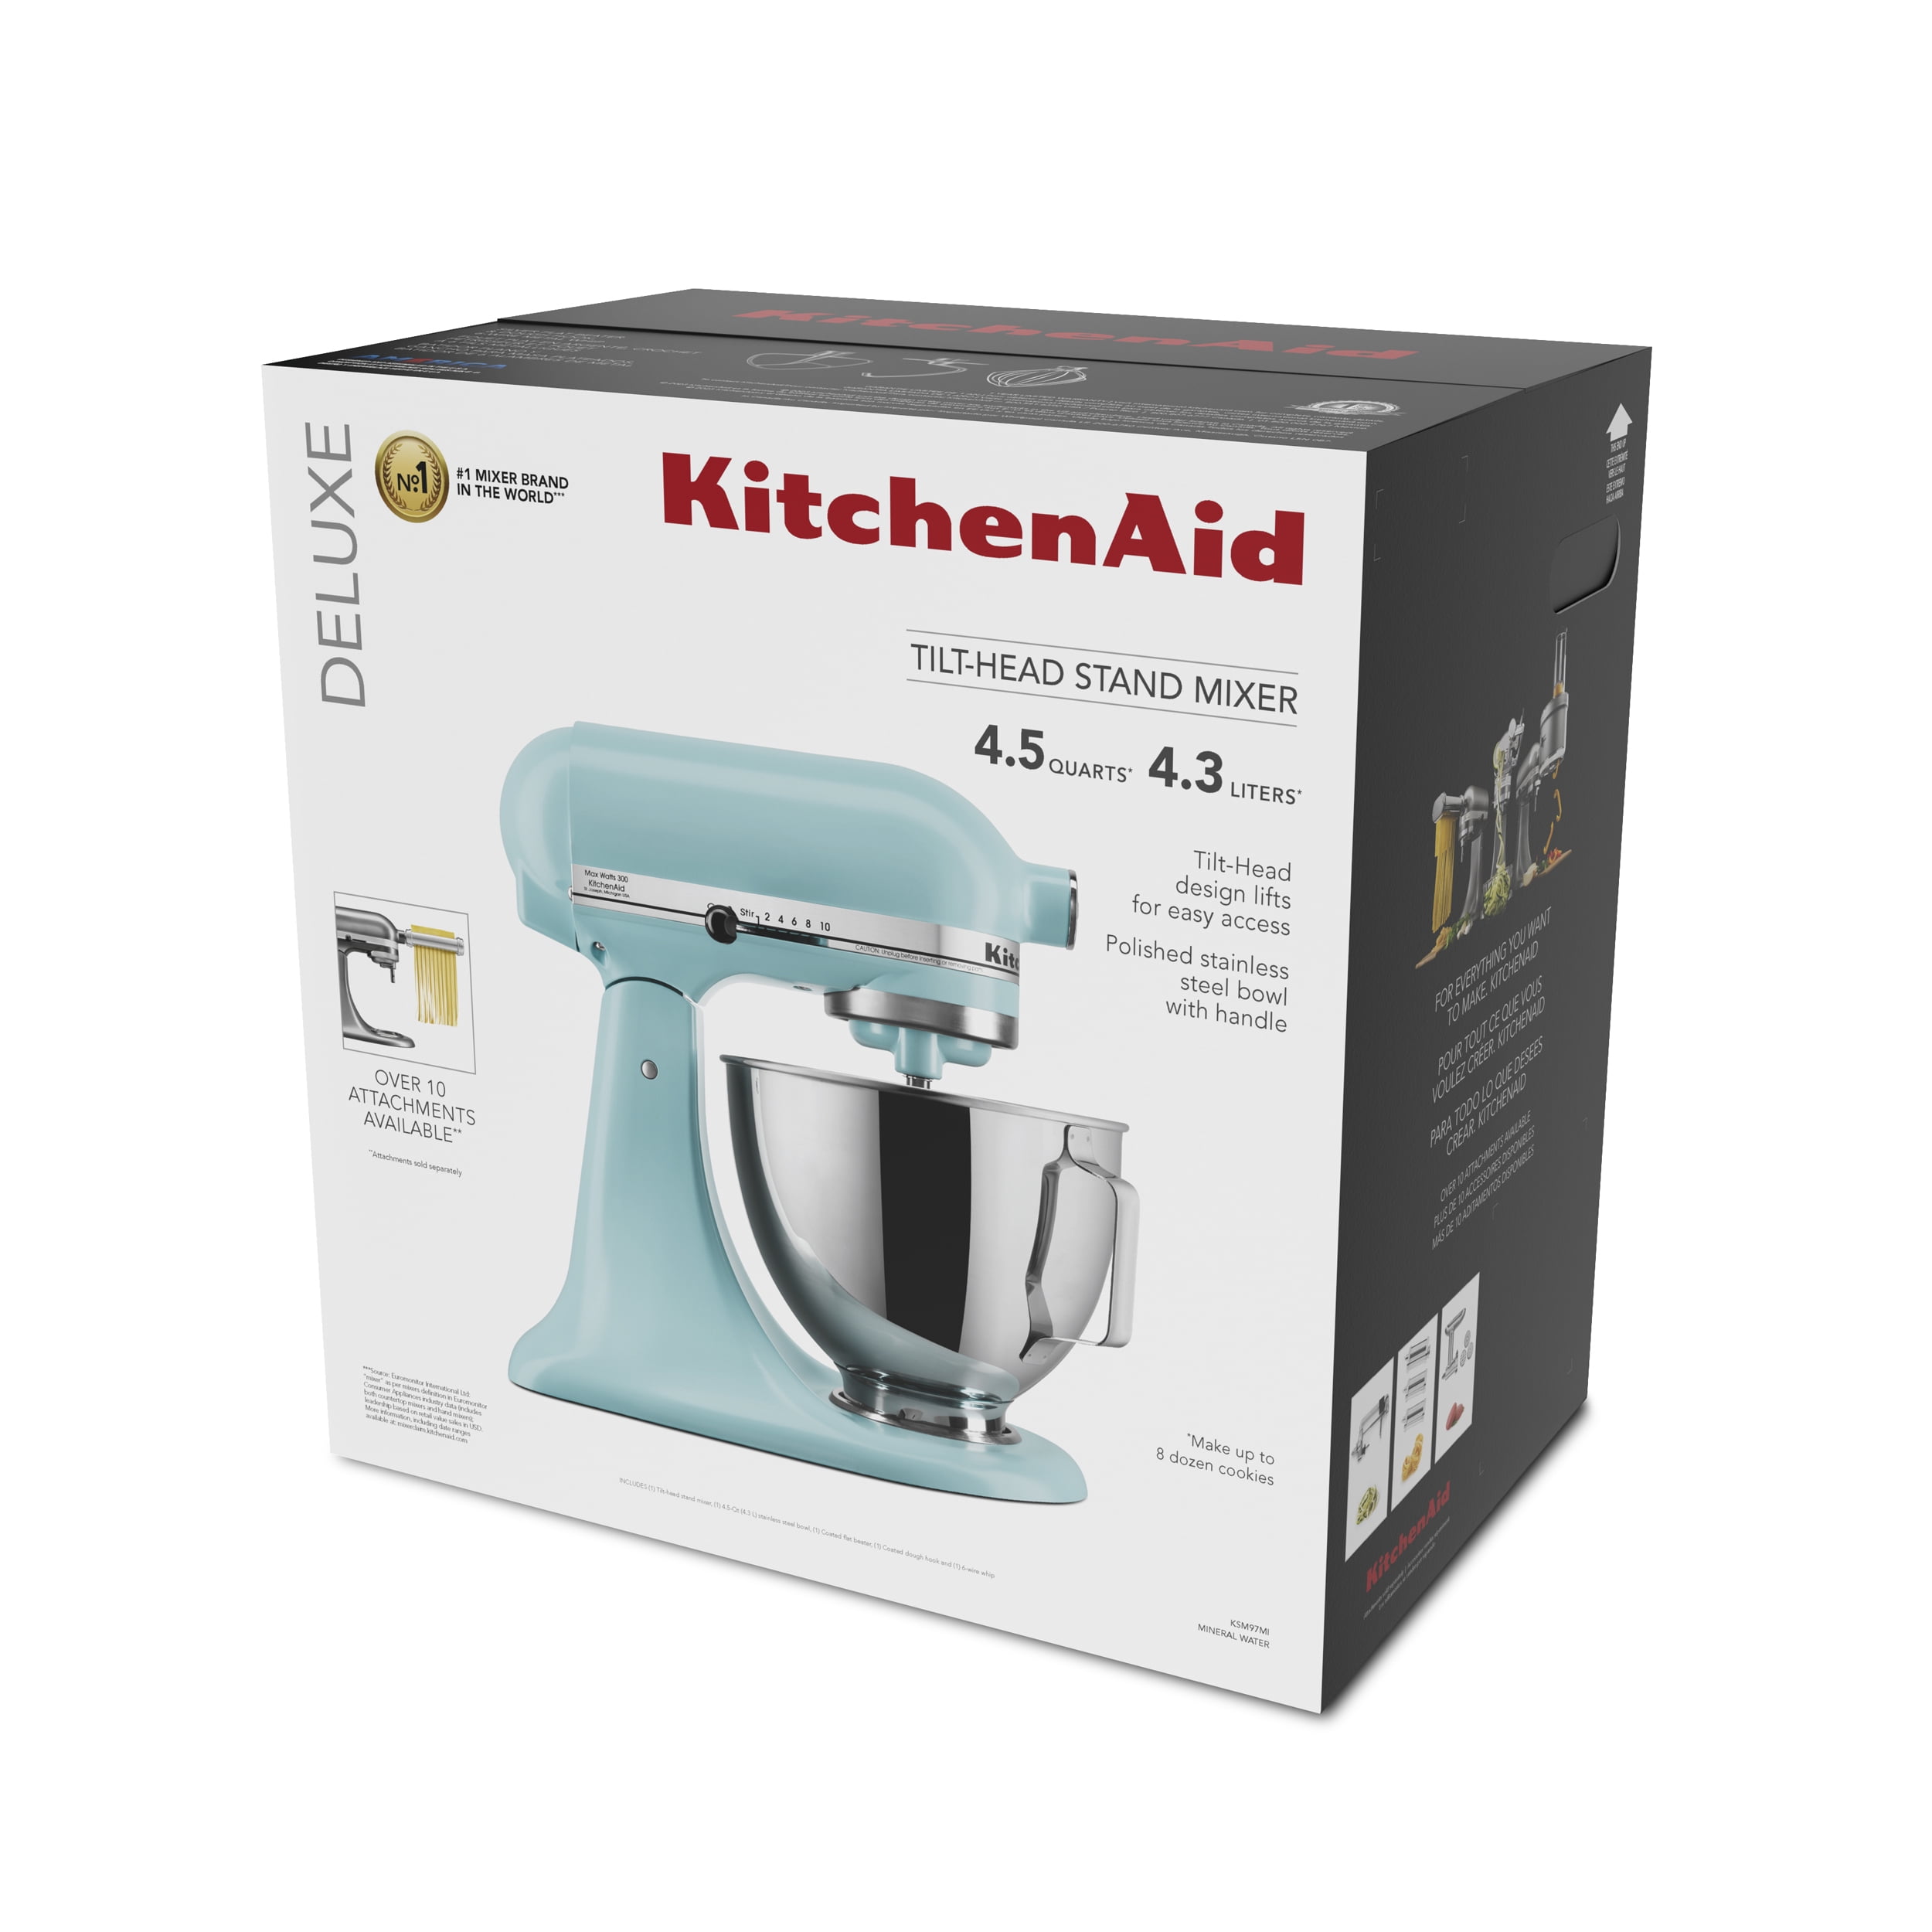 KitchenAid Deluxe 4.5 Quart Tilt-Head Stand Mixer Review 2022